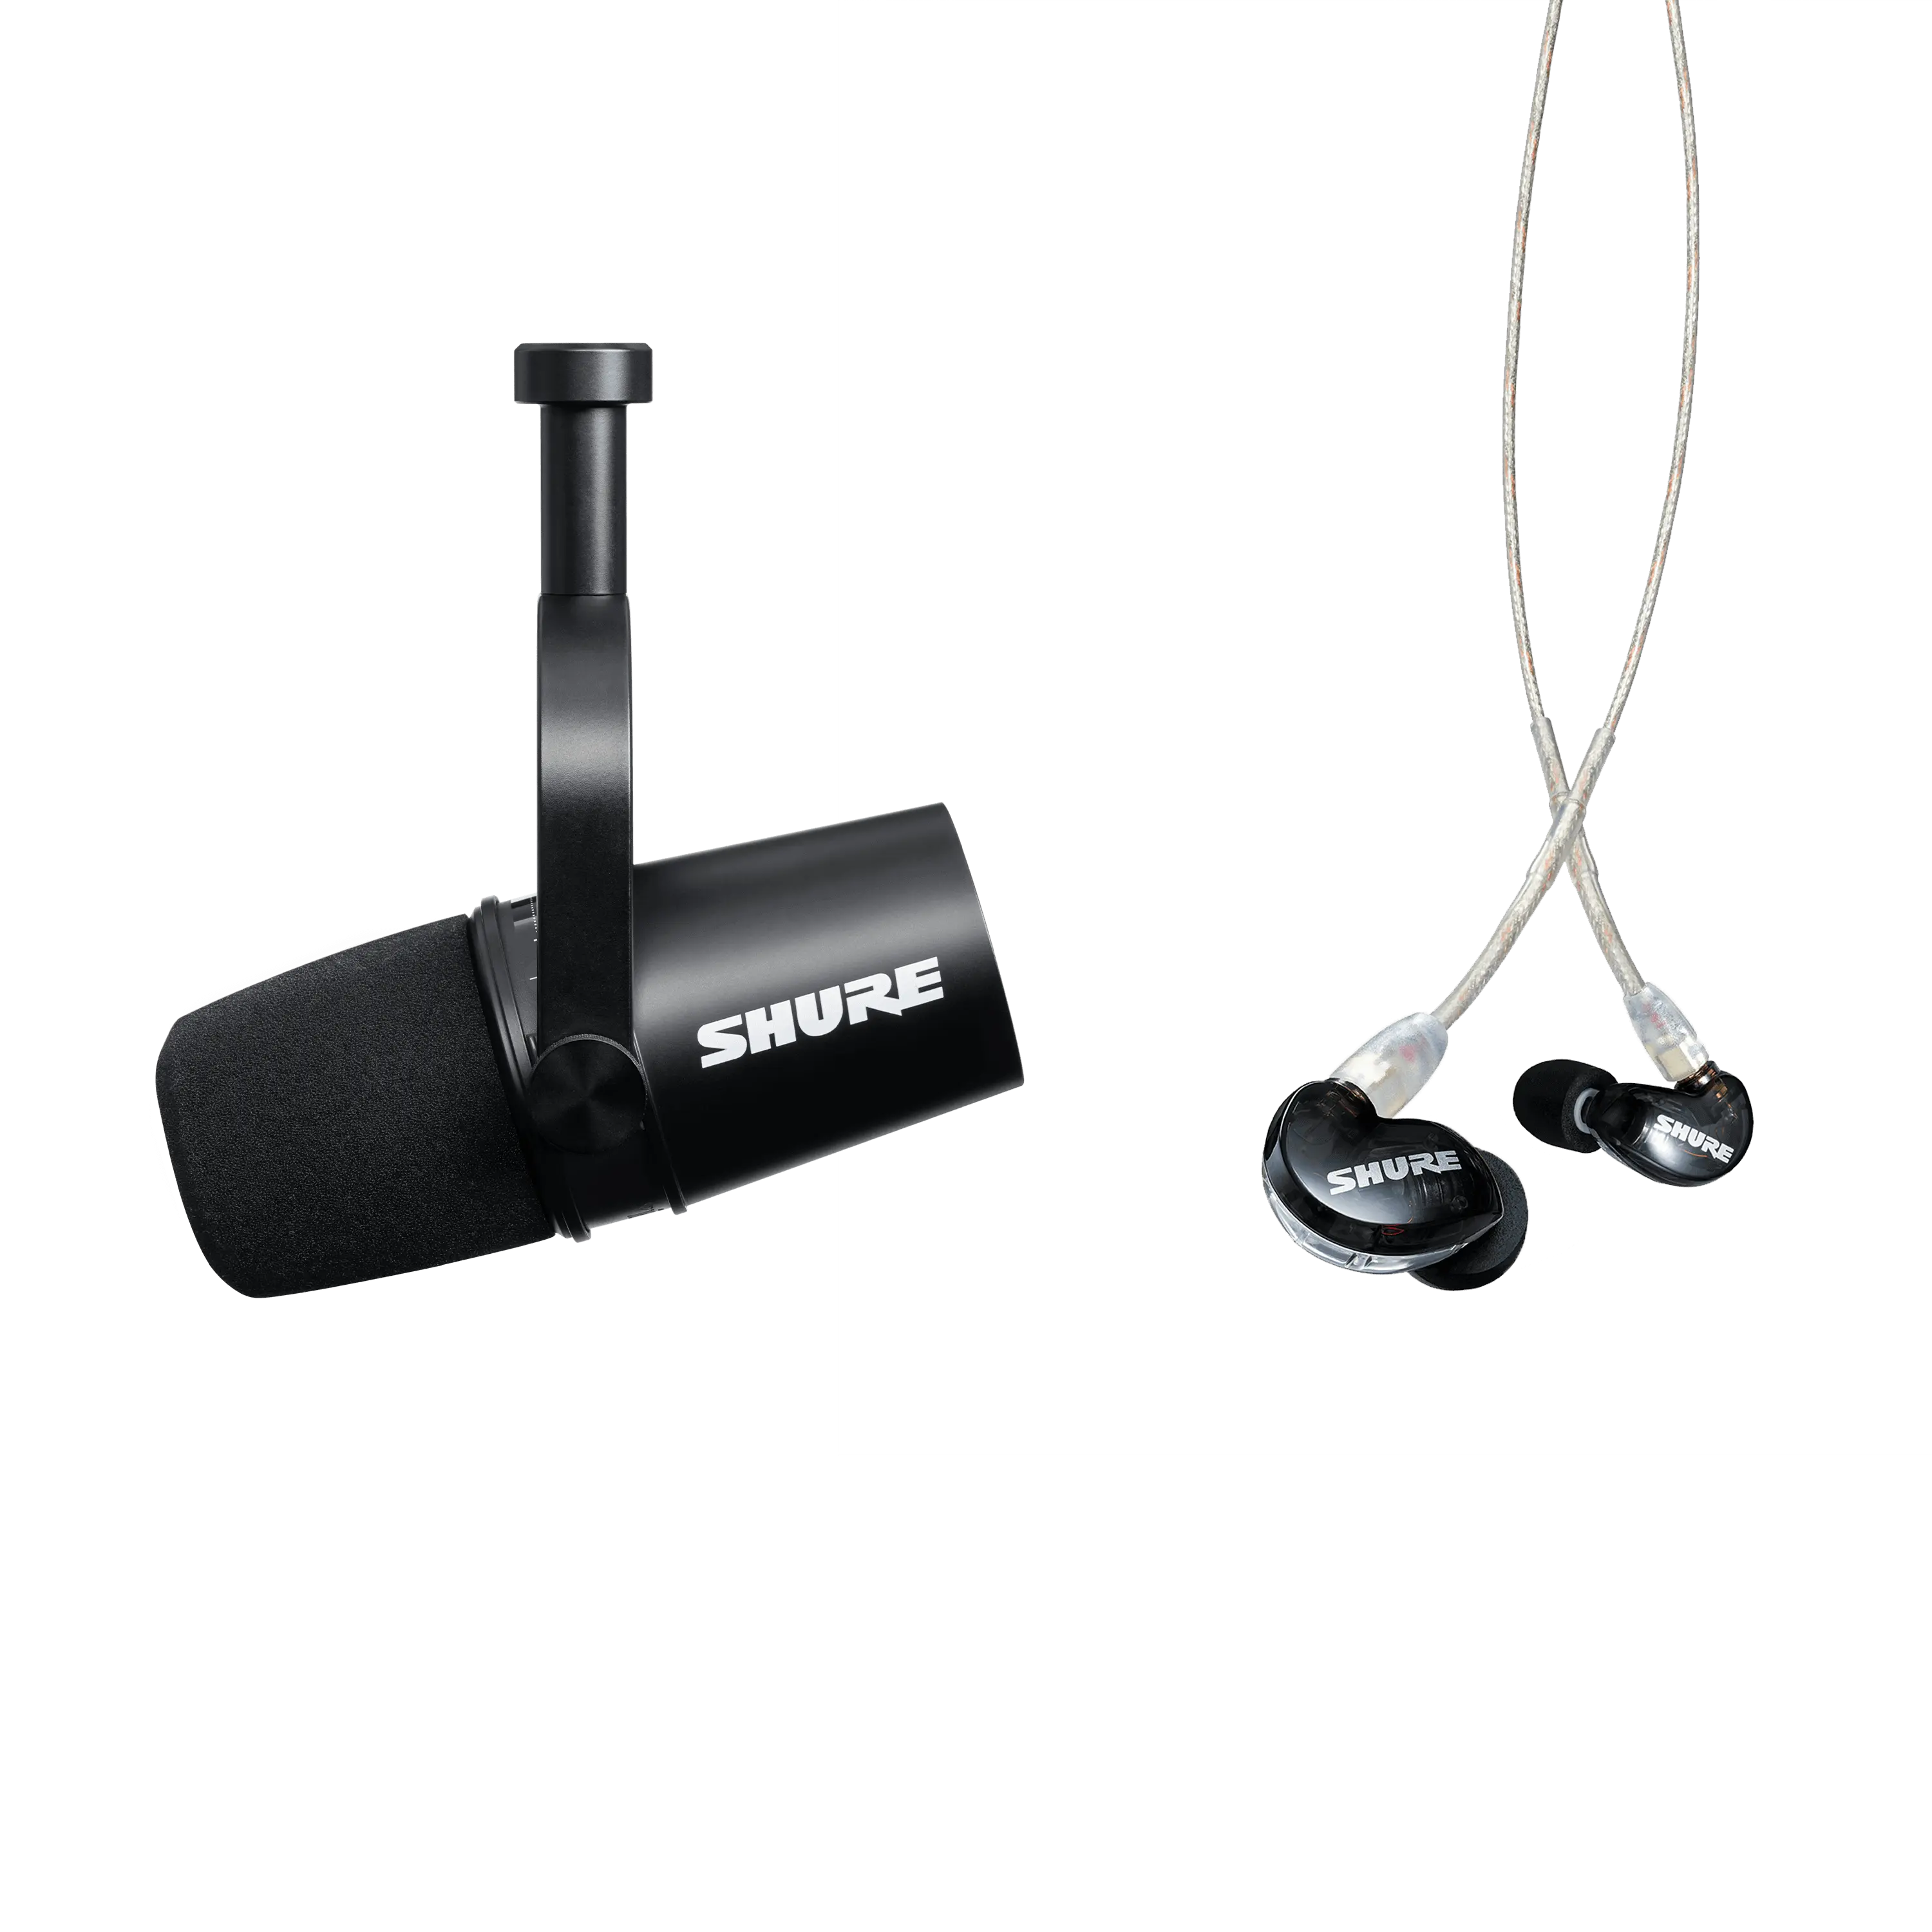 MV7 Kit and Wireless Headphone Bundle - MV7 Podcast Kit and Wireless  Headphone Bundle - Shure USA